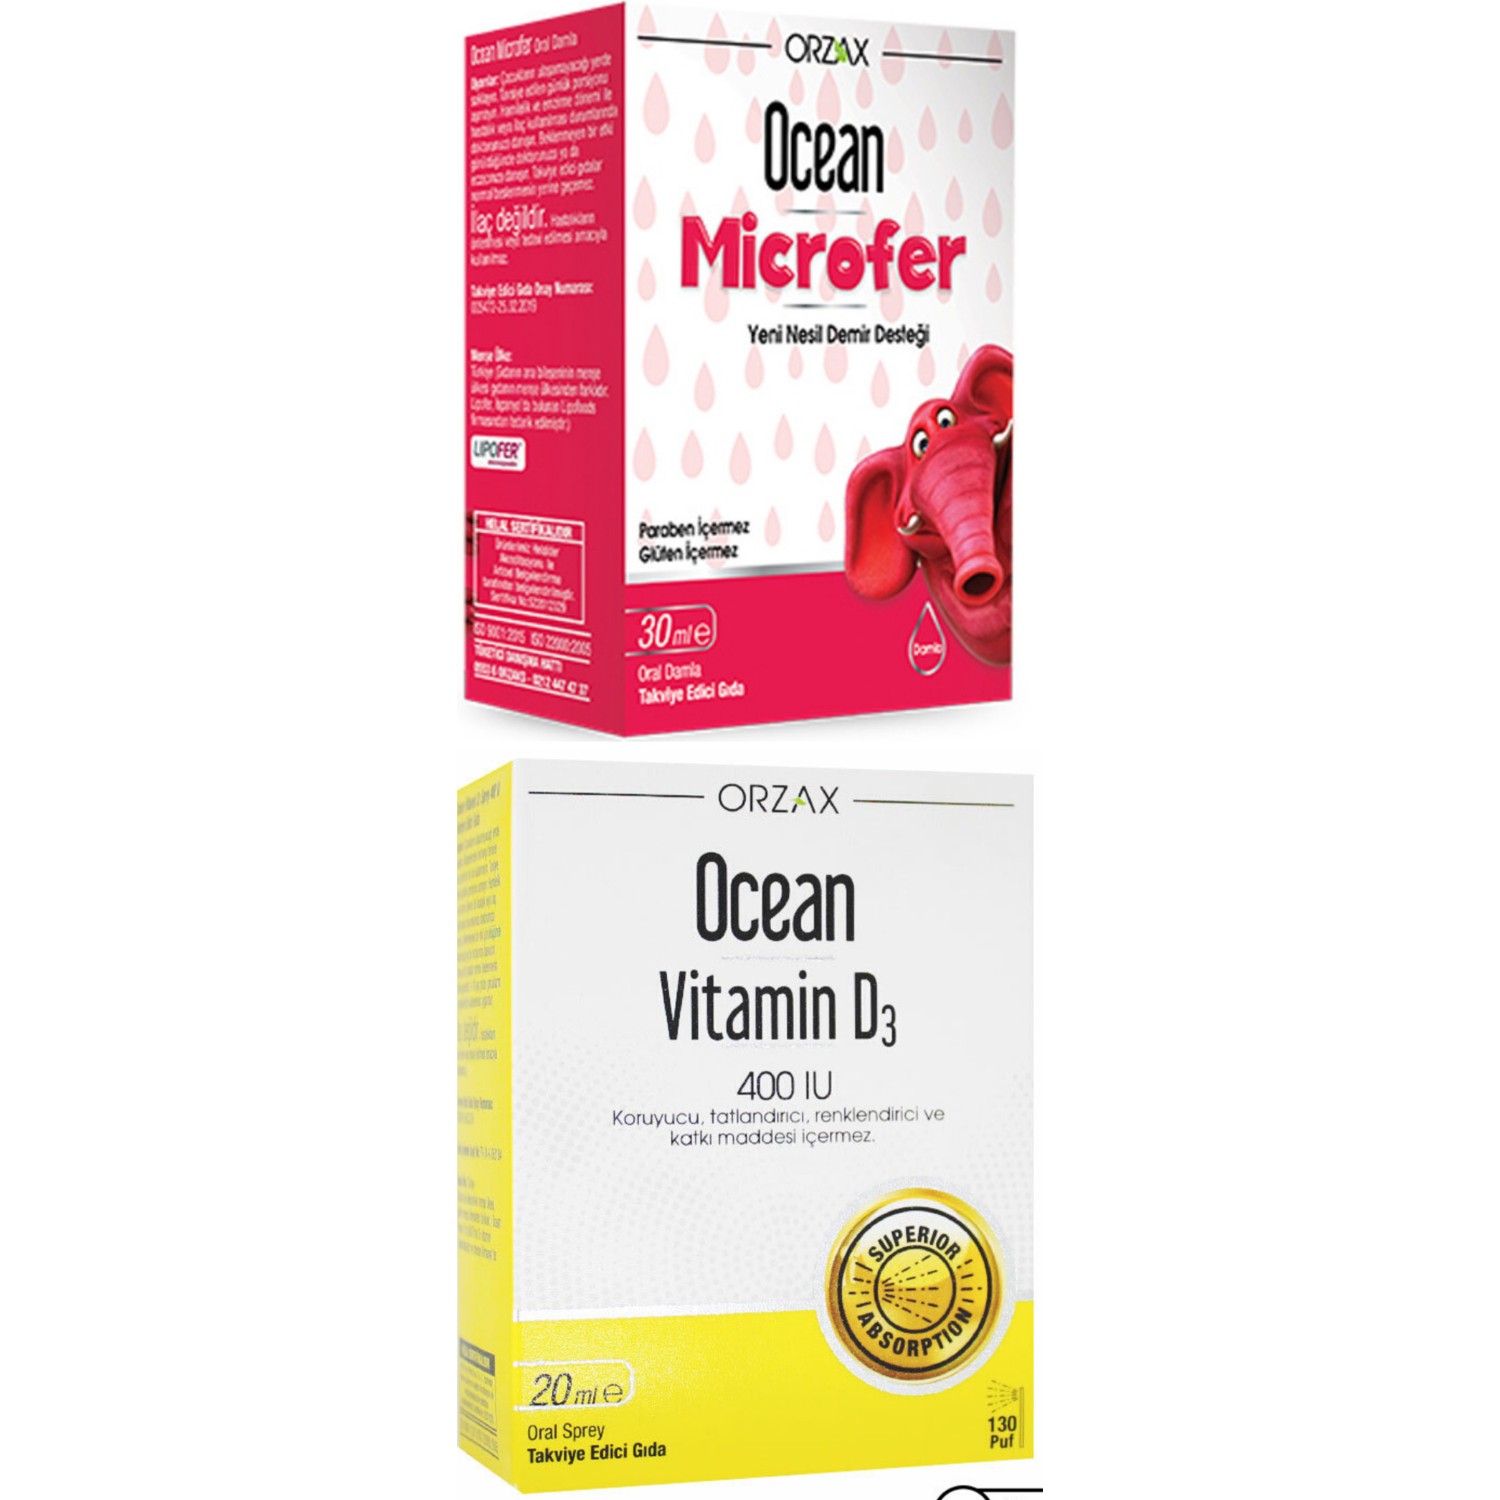 Капли Orzax Ocean Microfer Oral, 30 мл + Витамин D3 Ocean 400 IU, 20 мл цена и фото